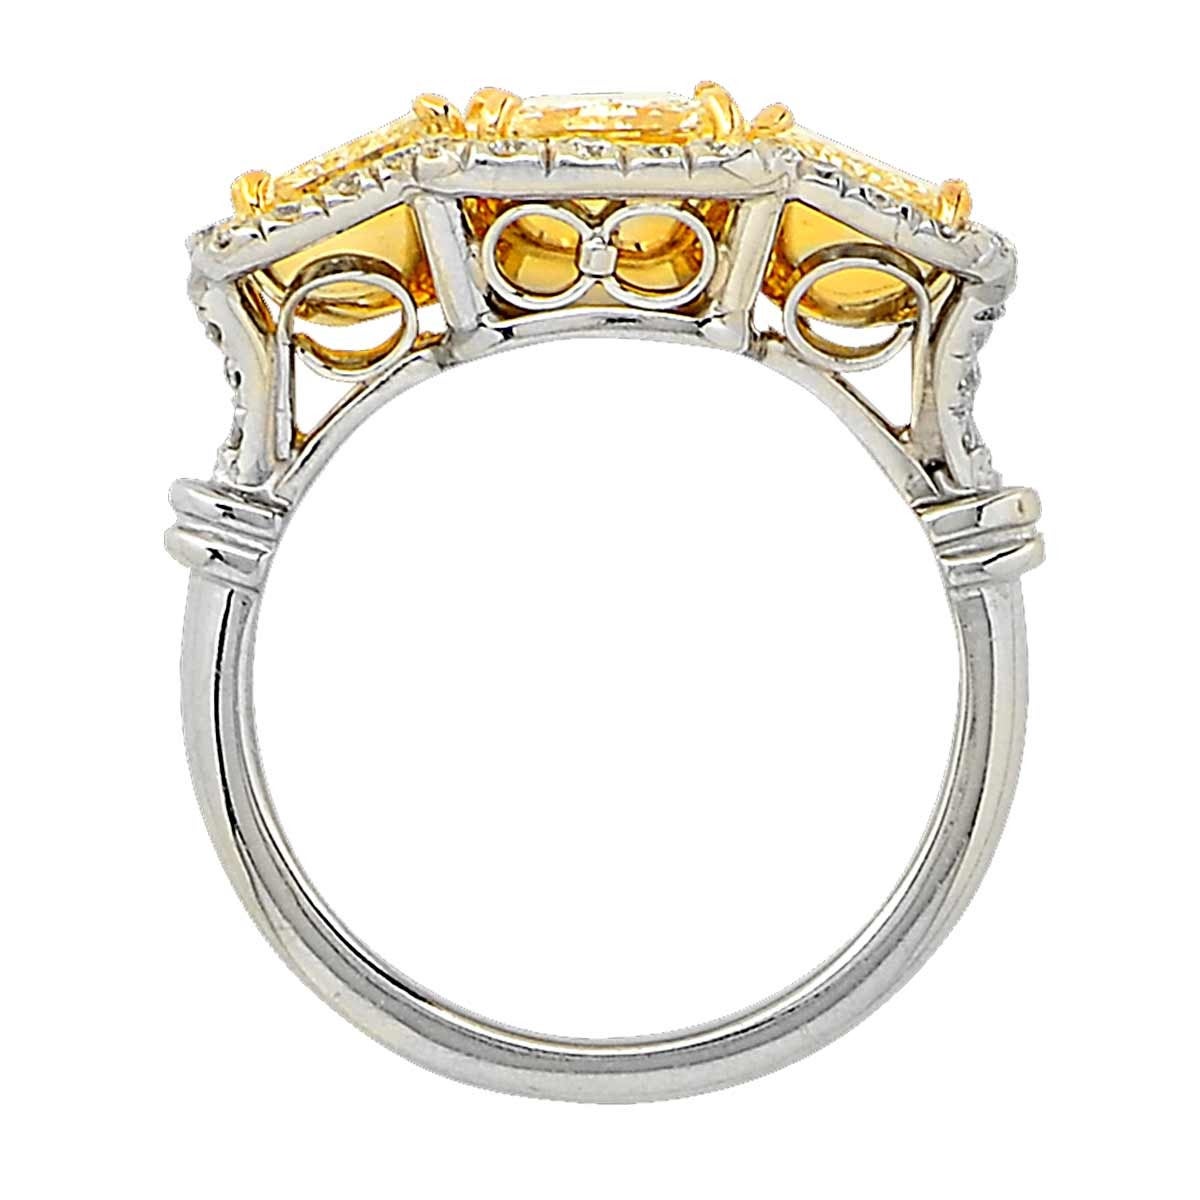 5 carat yellow diamond ring price